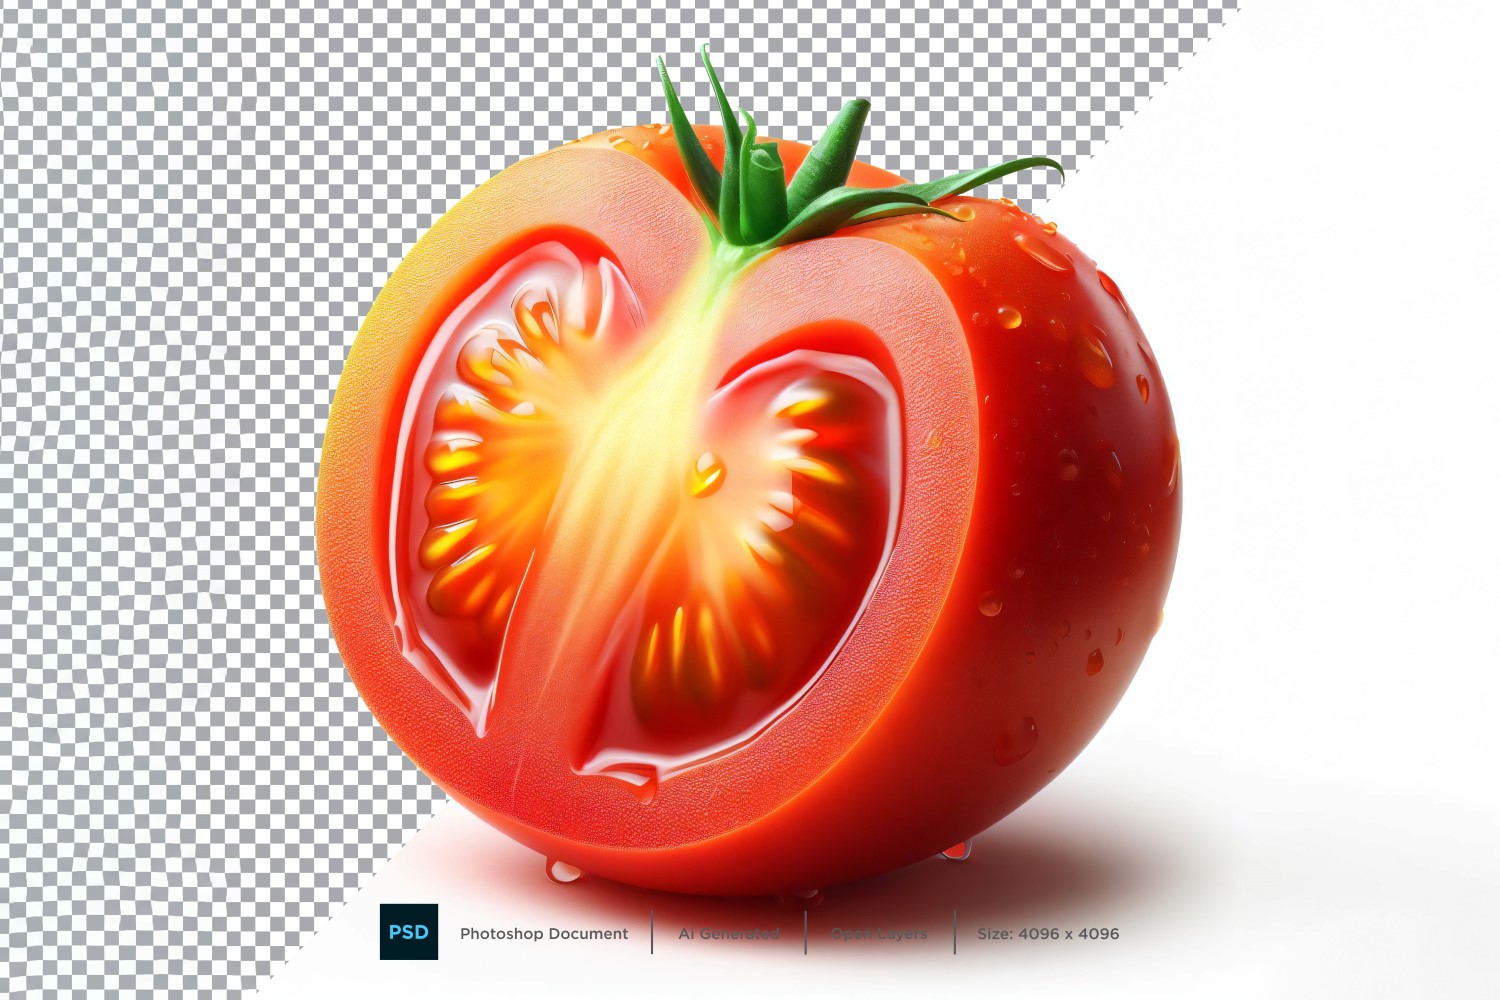 Tomato Fresh Vegetable Transparent background 03